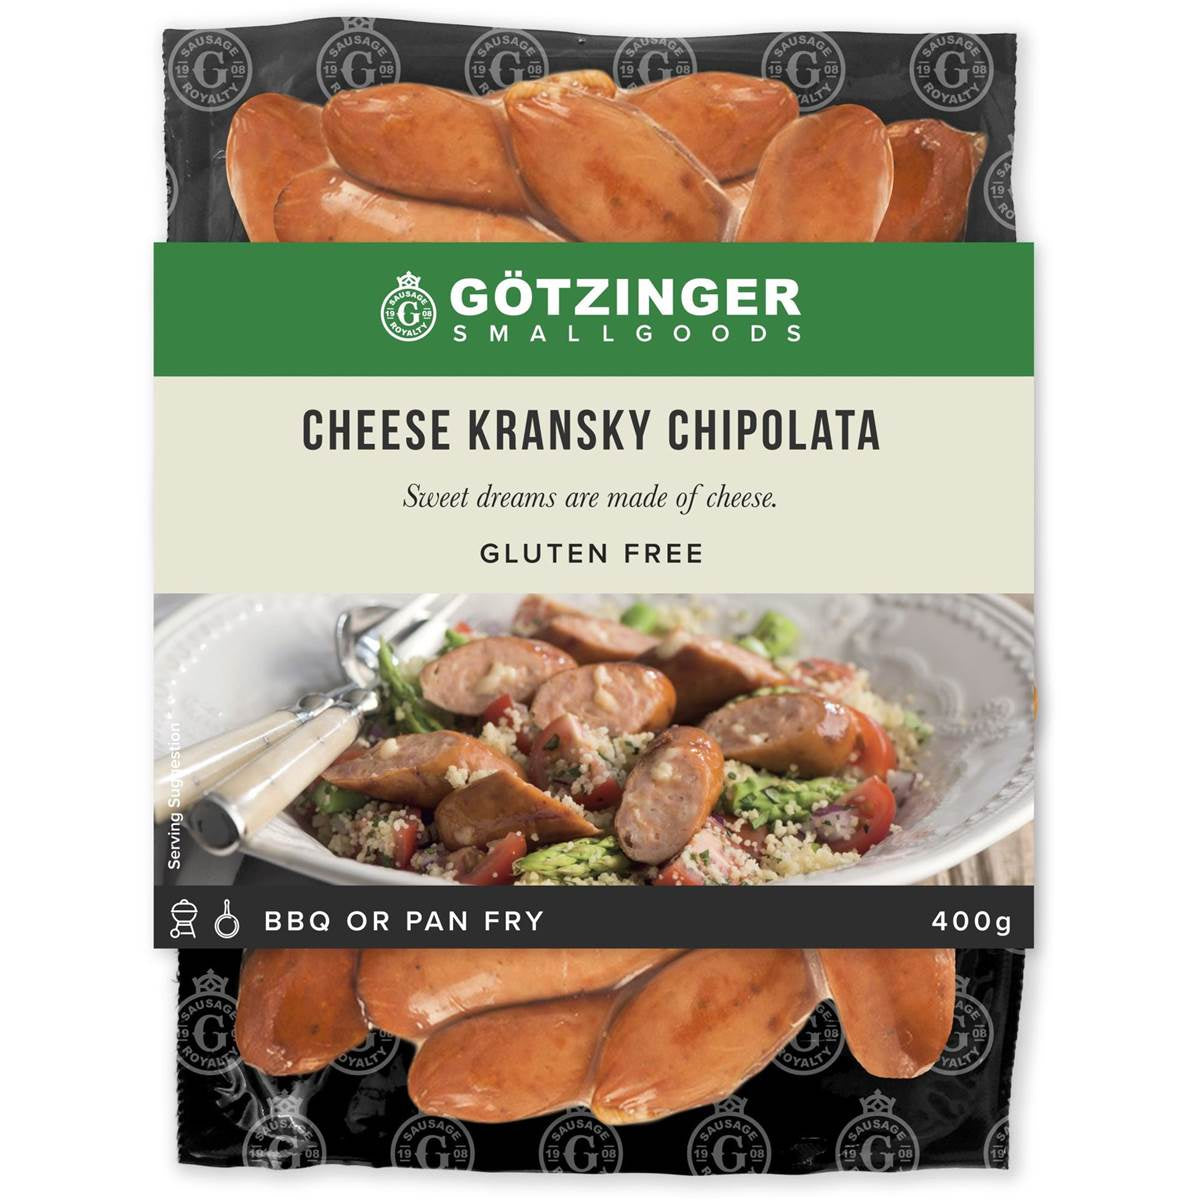 Gotzinger Cheese Kransky Chipolata 400g